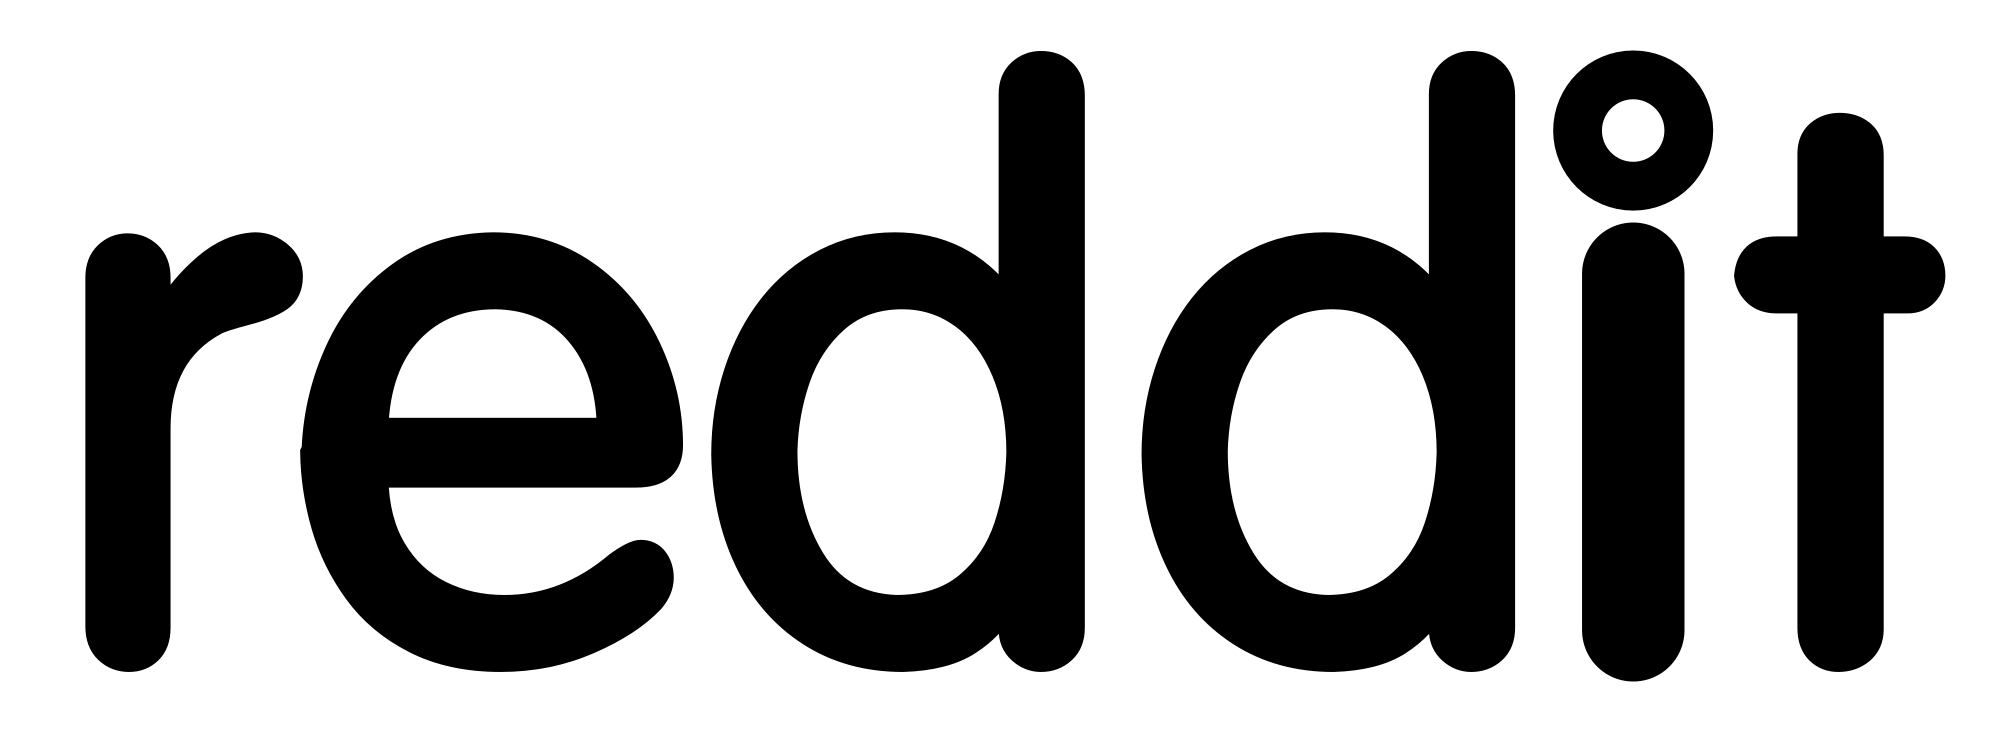 Reddit Logo - File:Reddit logo.svg - Wikimedia Commons